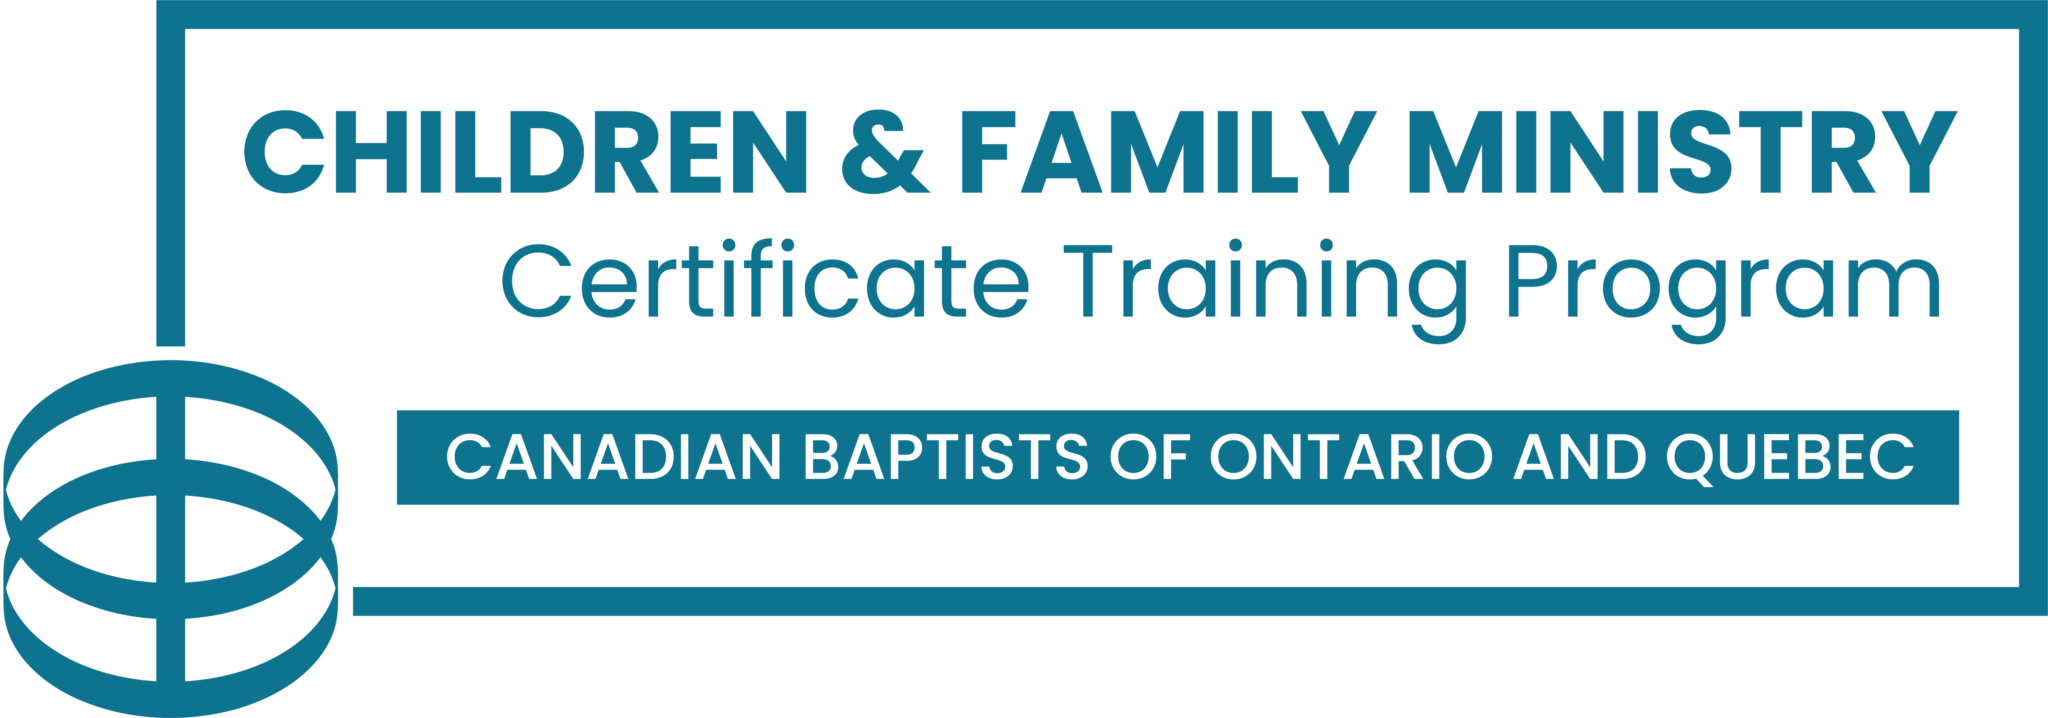 Children and Family Ministry Certificate Training Program